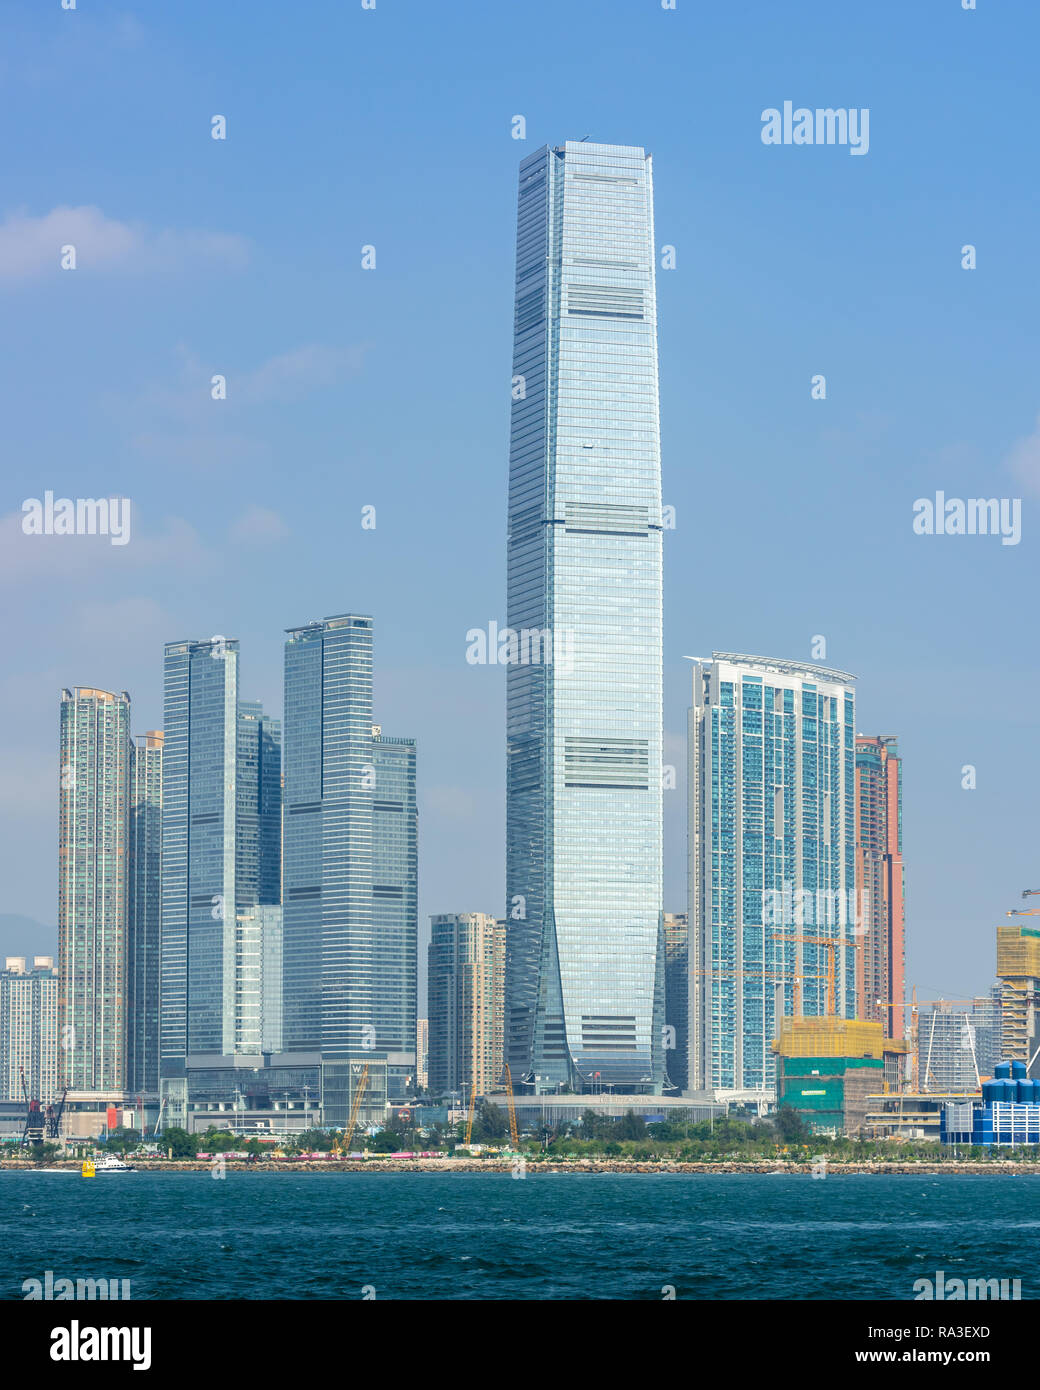 tallest skyscraper in hong kong